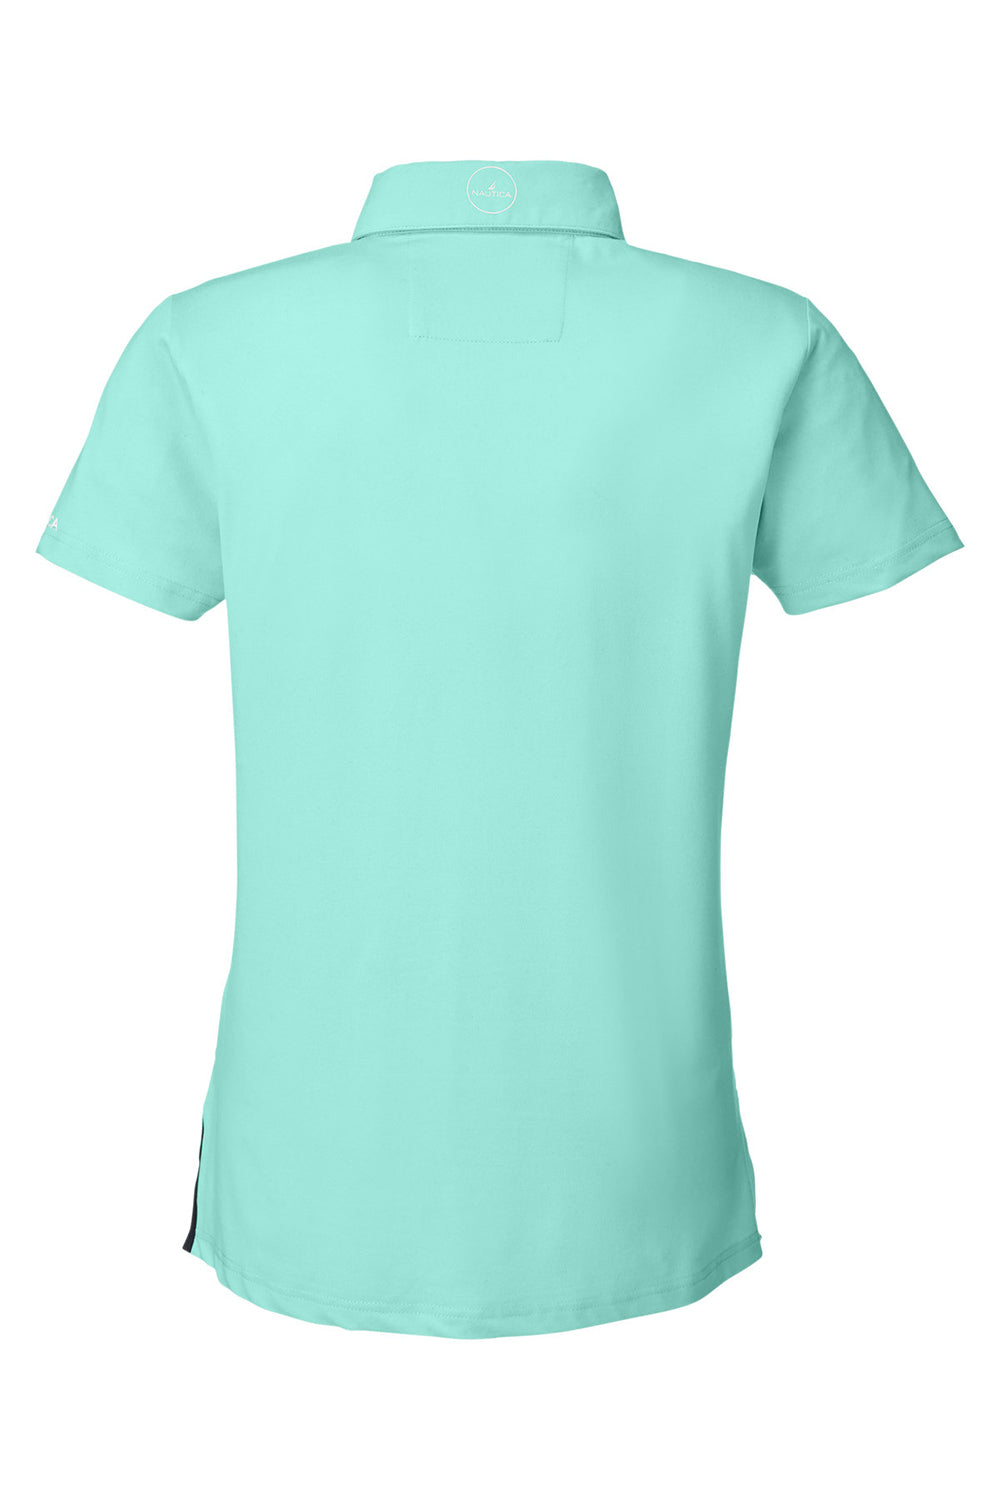 Nautica N17923 Womens Saltwater Short Sleeve Polo Shirt Cool Mint Green Flat Back